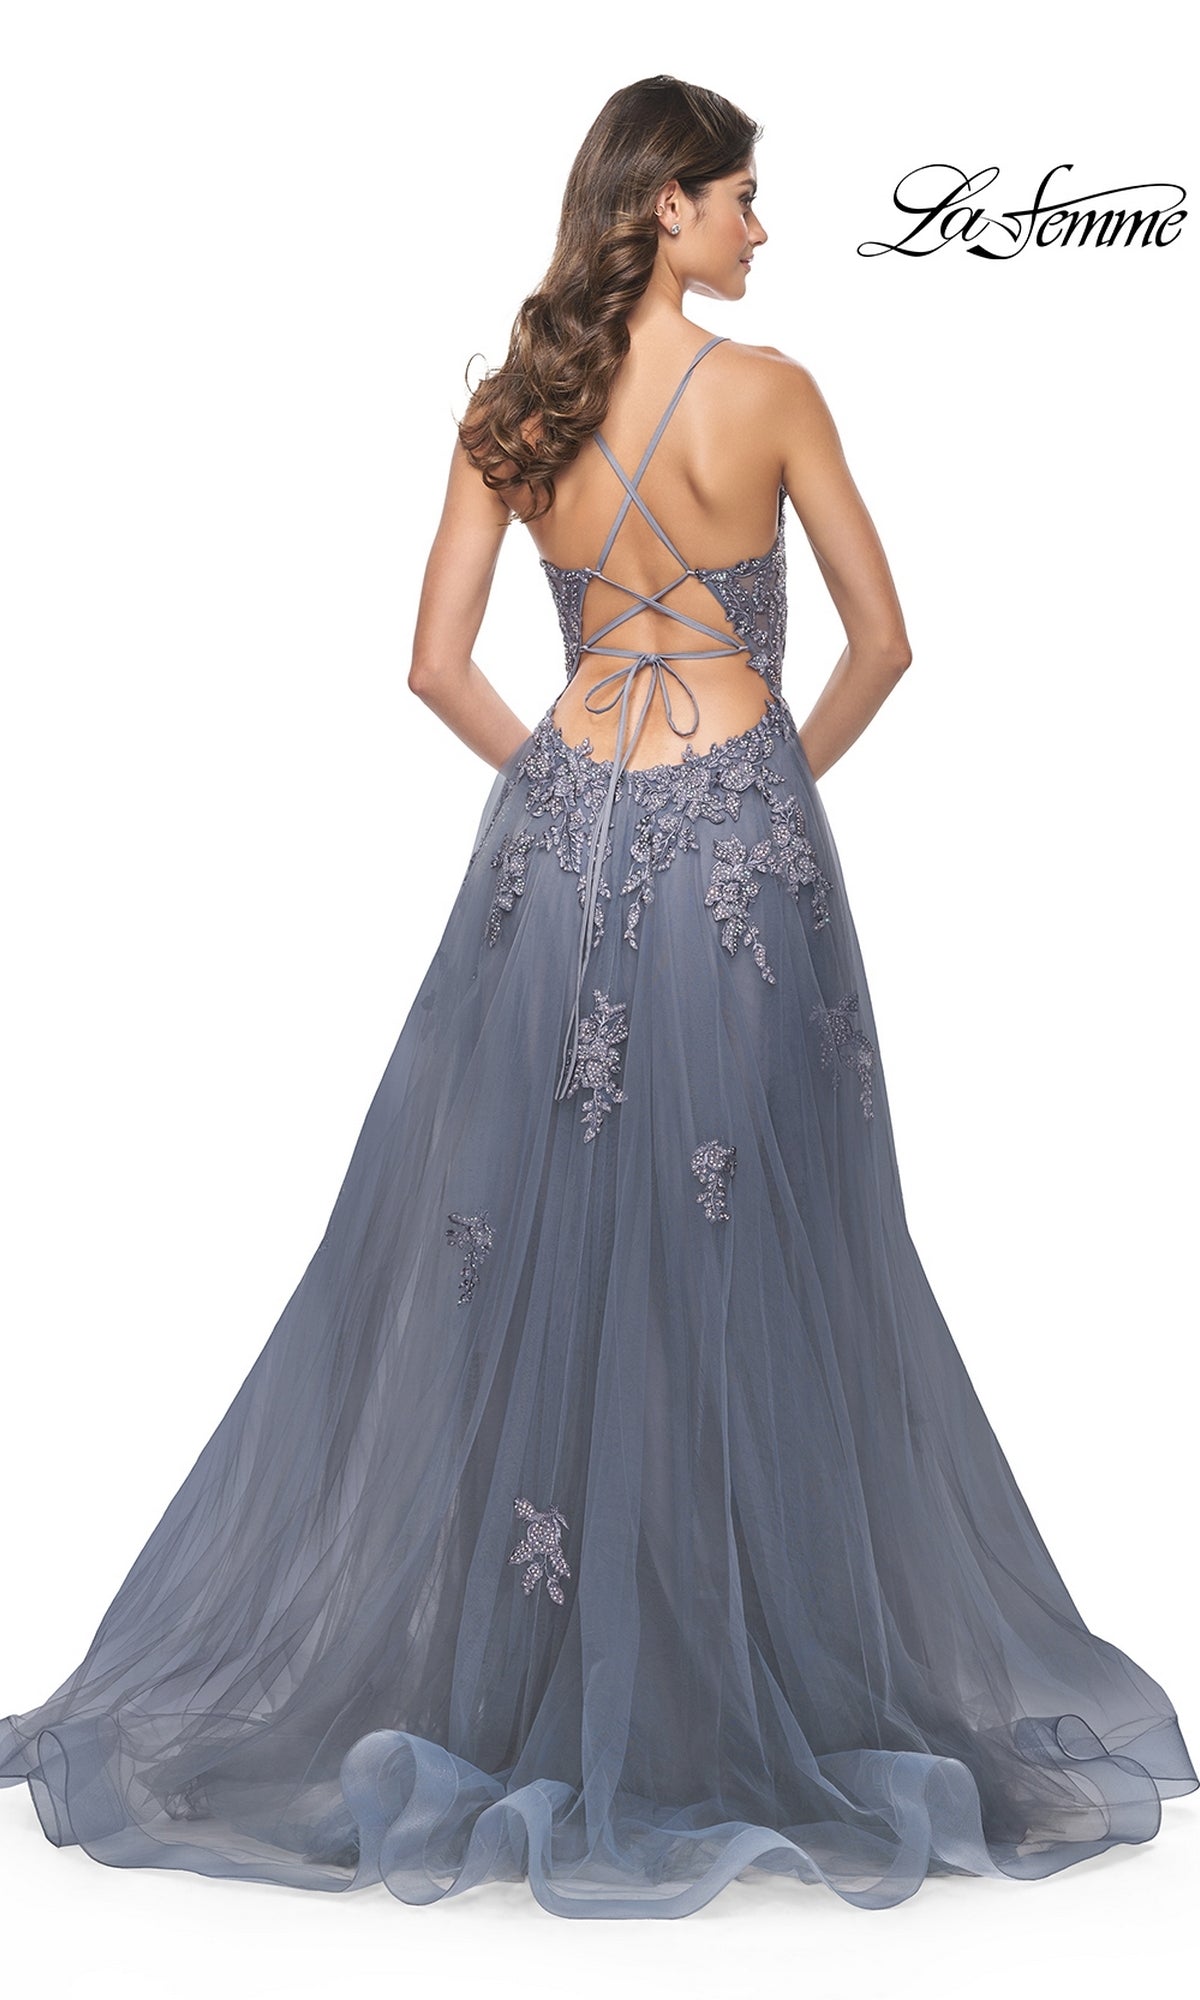  La Femme 31472 Formal Prom Dress